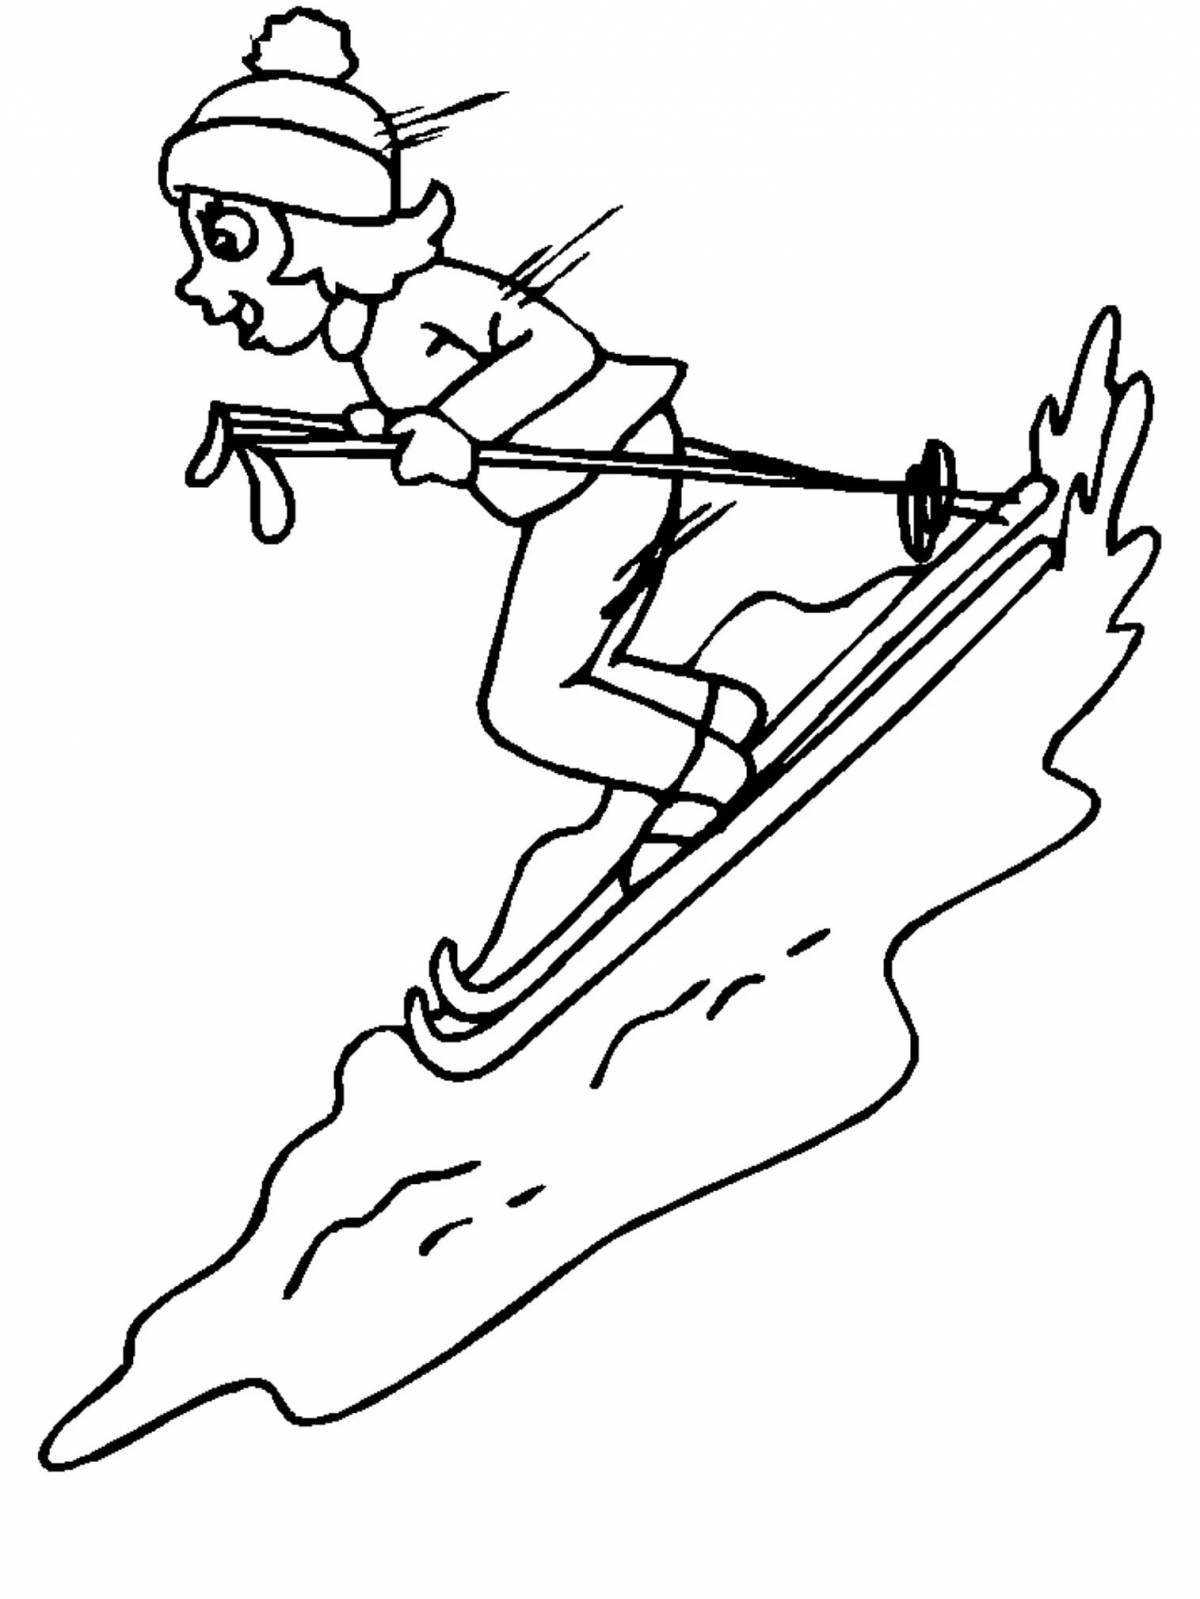 Cheerful man on skis